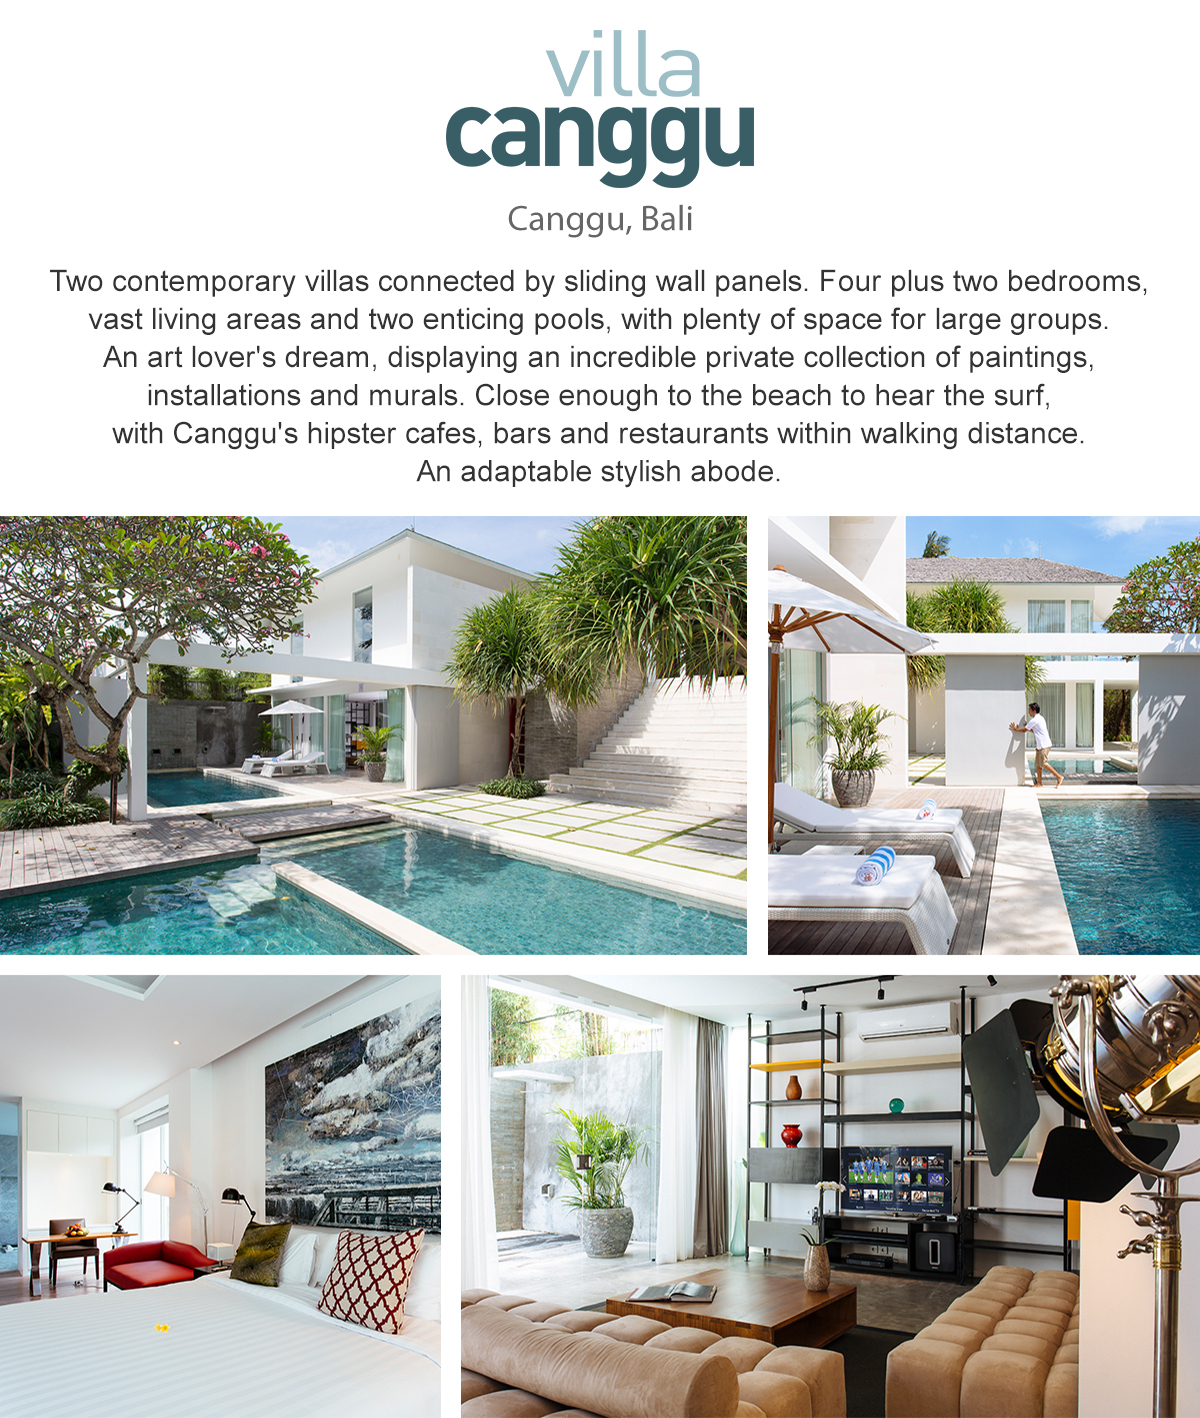 Villa Canggu - Canggu, Bali